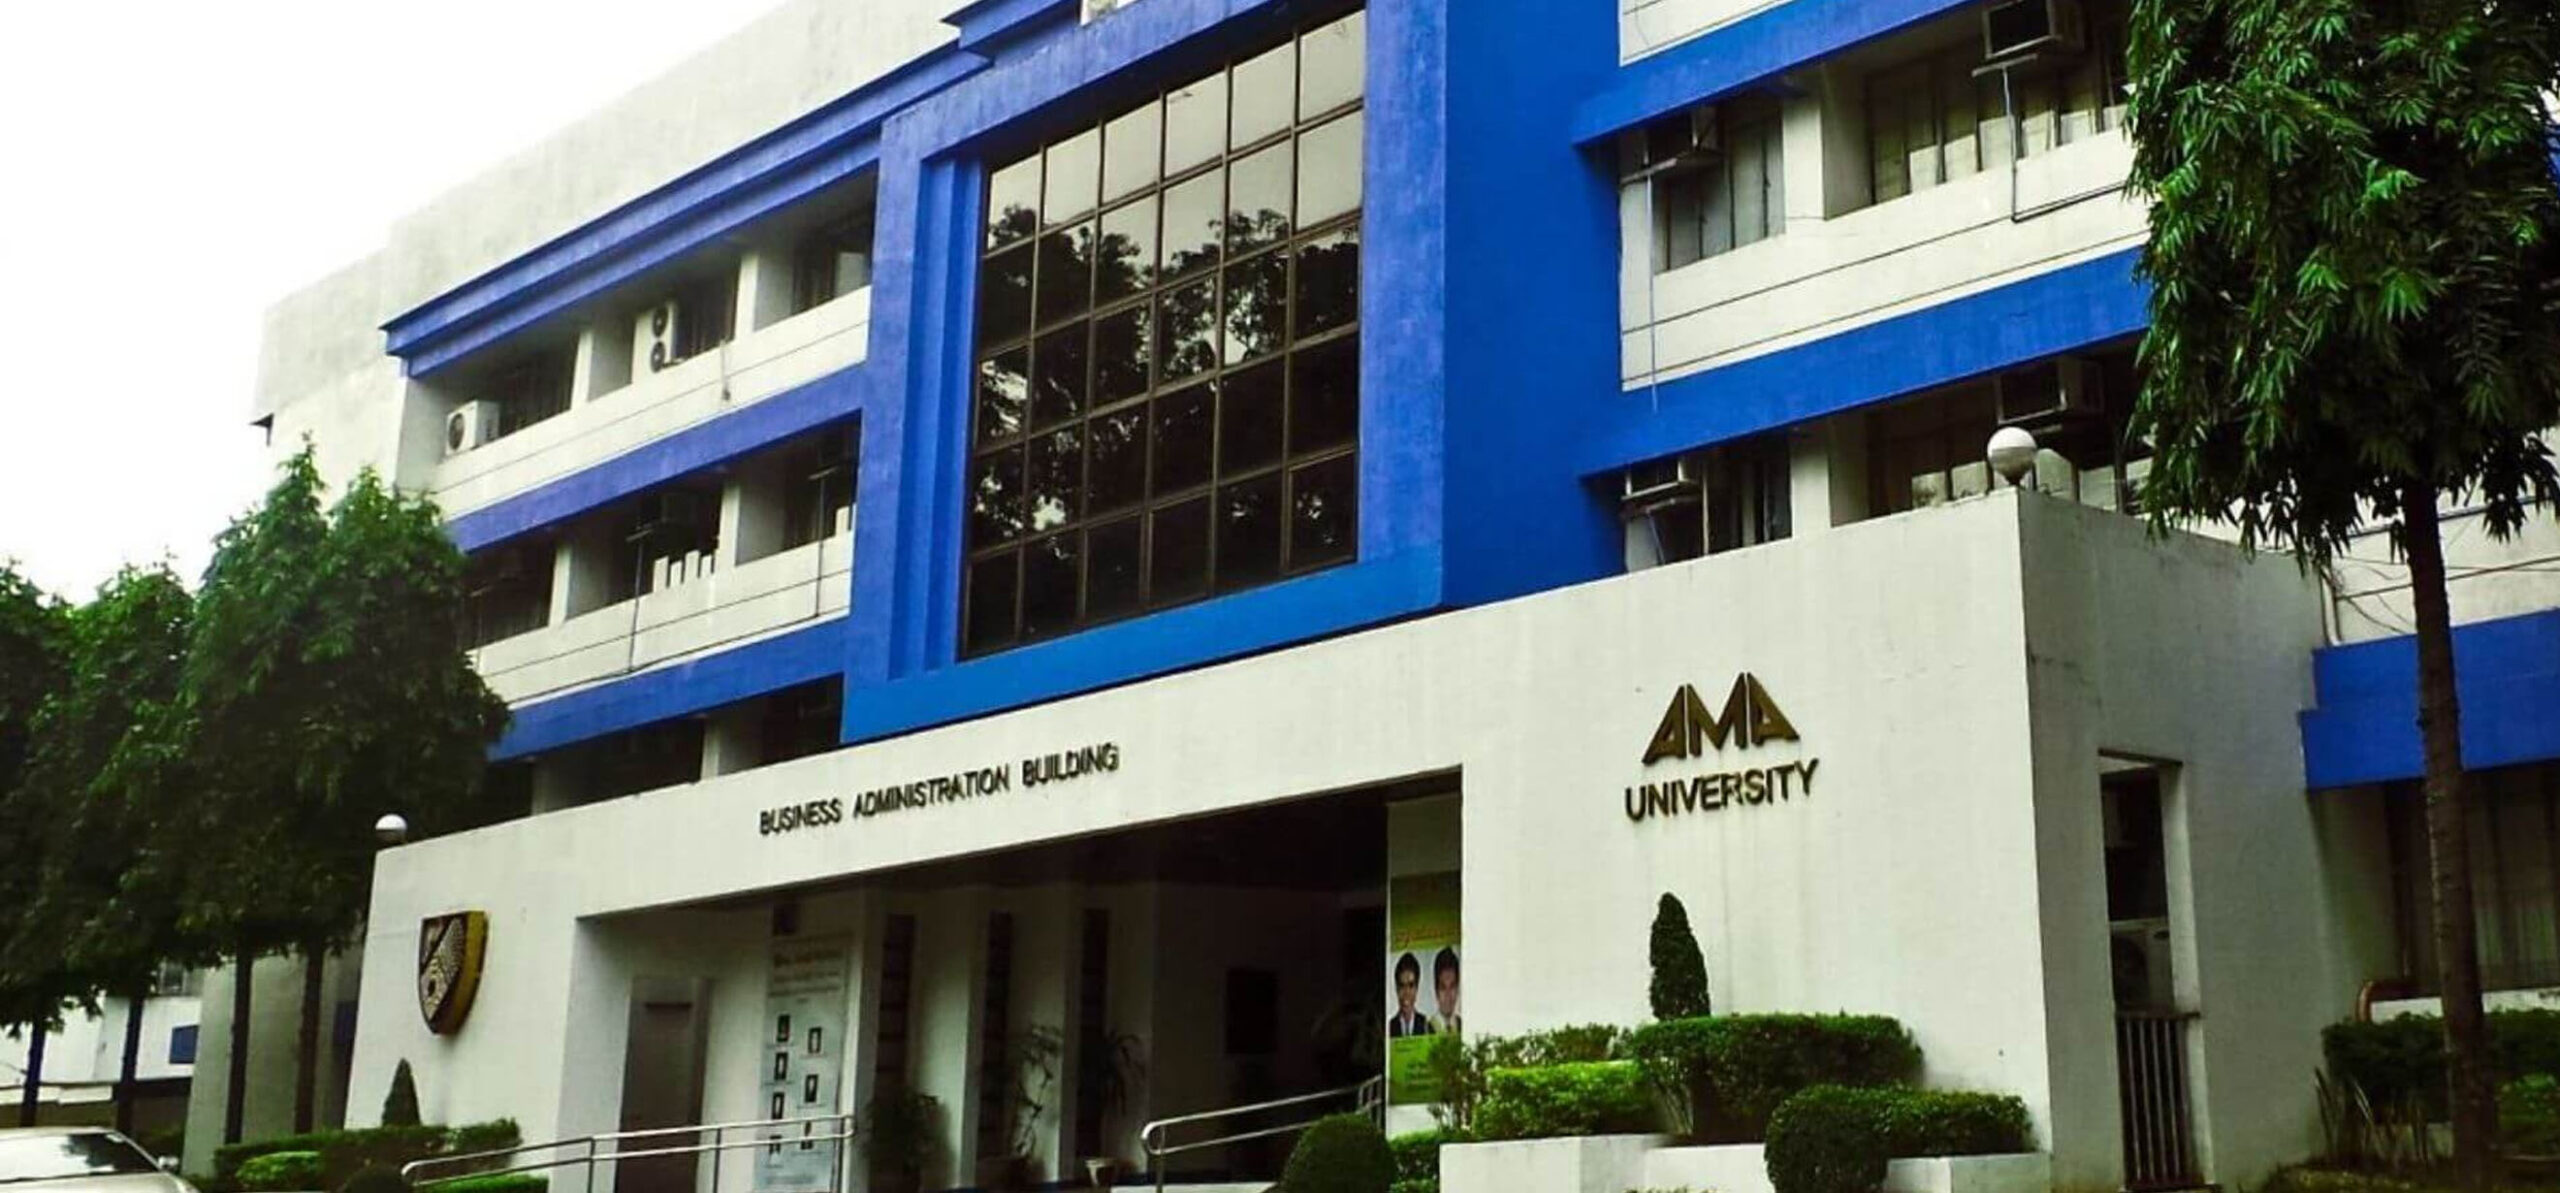 AMA School of Medicine